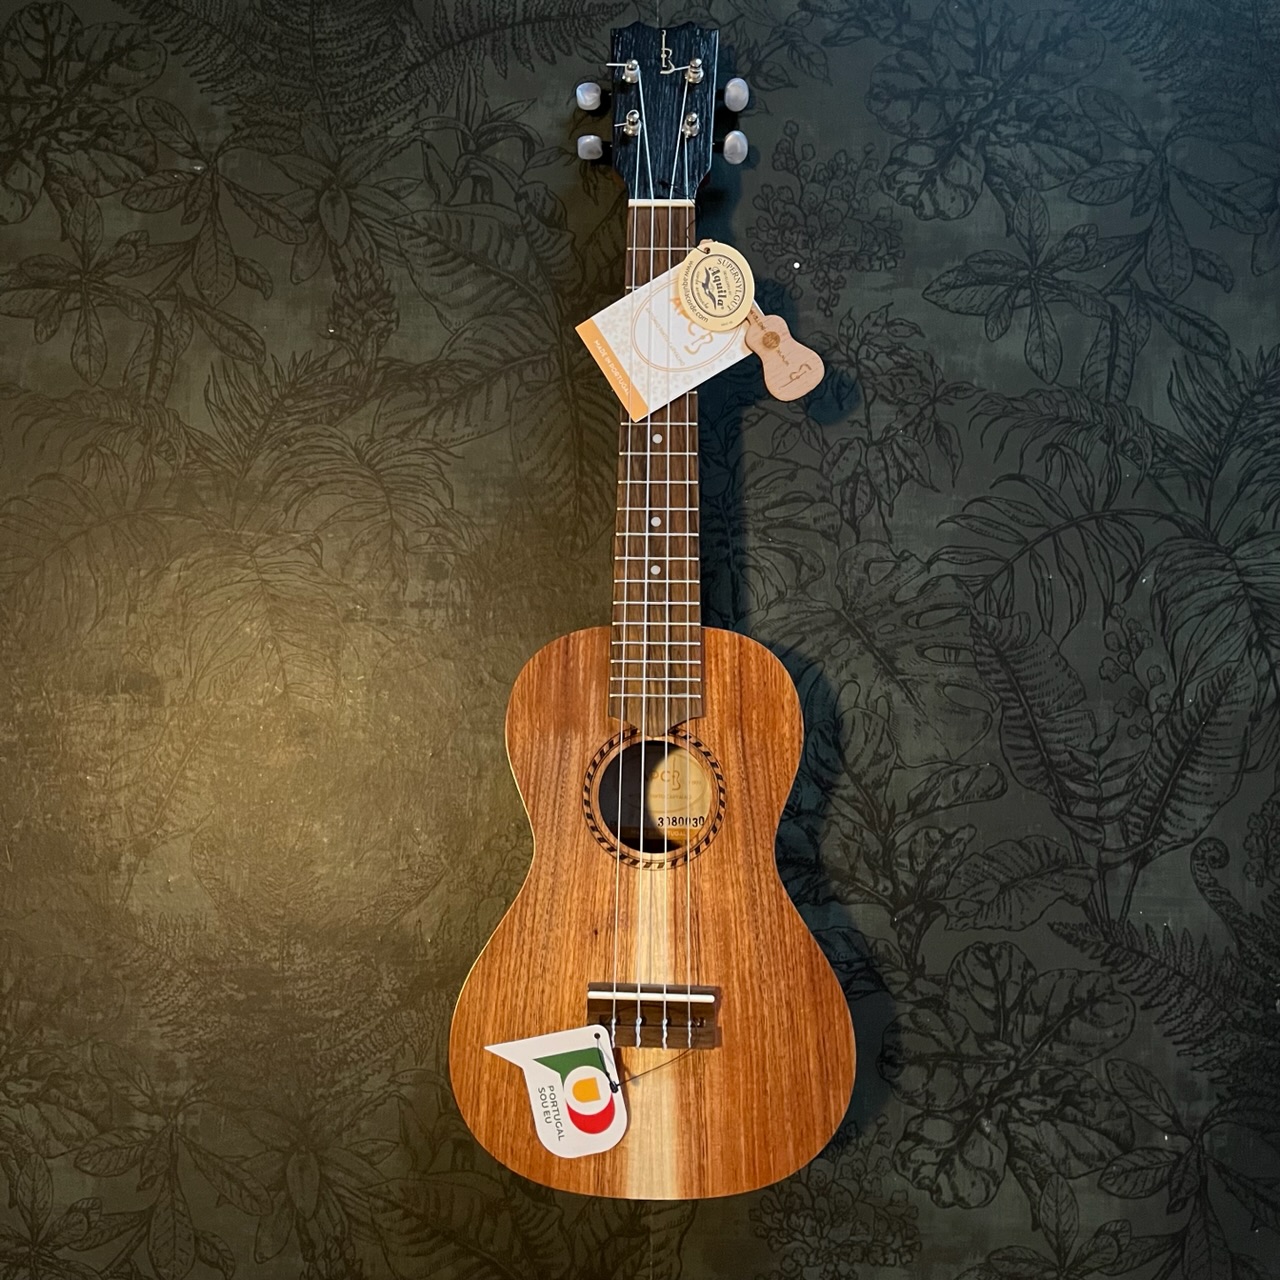 APC carvalho Concert ukulele